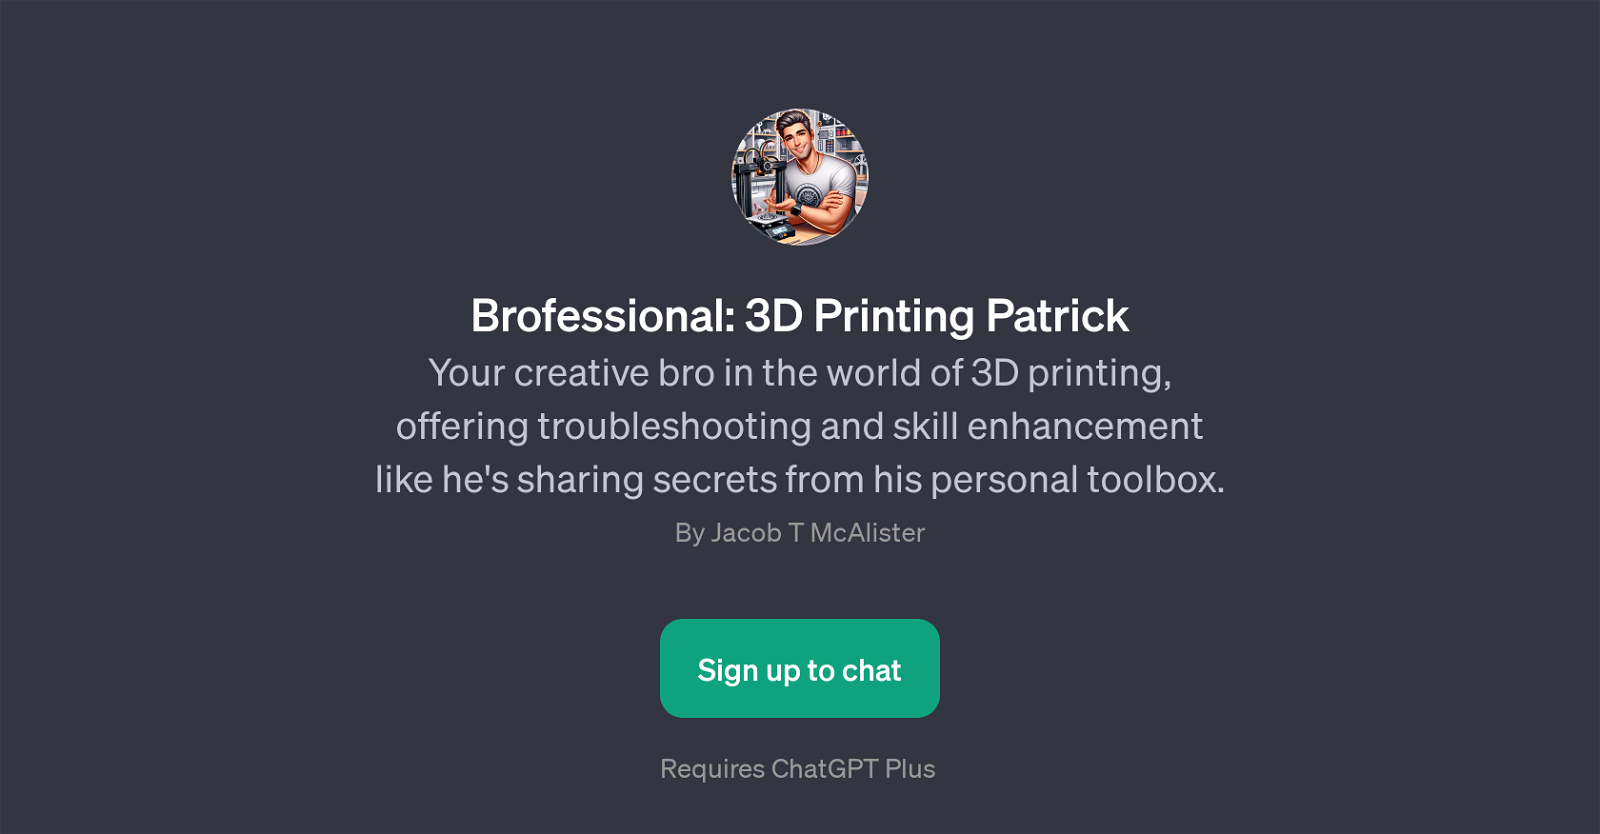 Brofessional: 3D Printing Patrick website